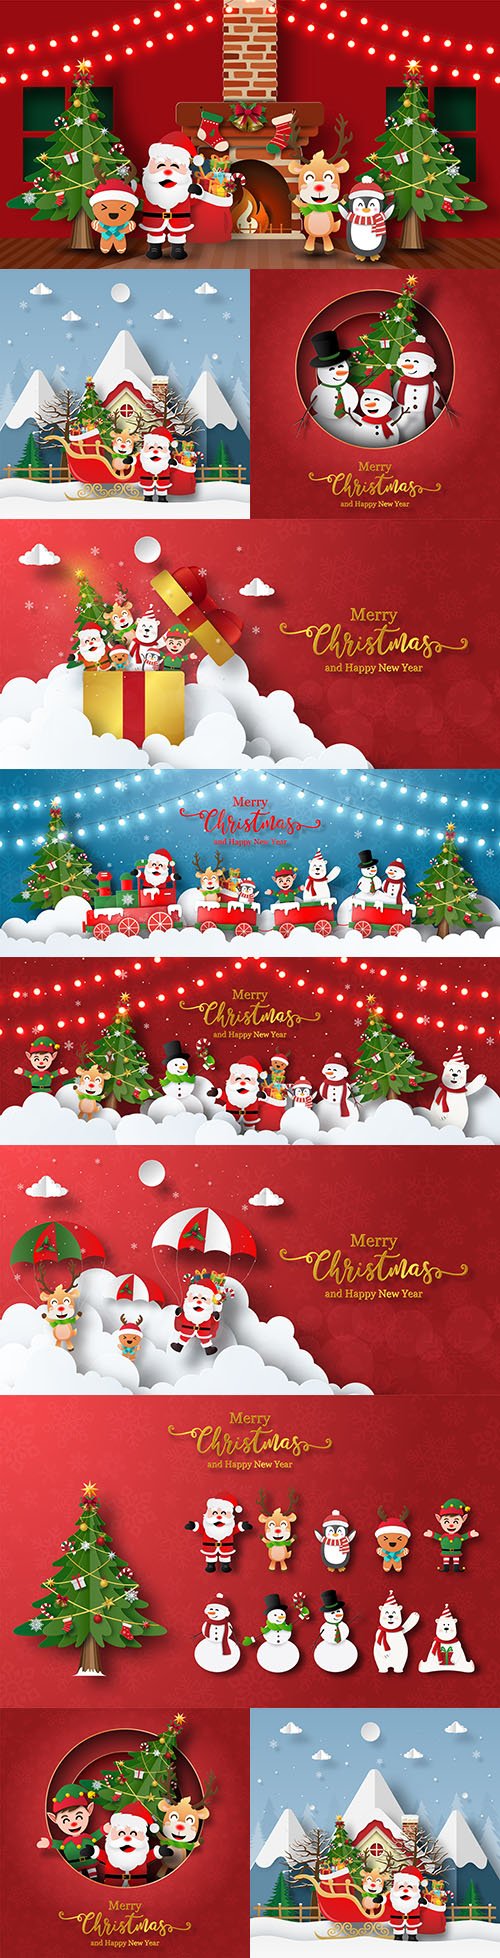 Christmas holiday greetings Santa and friends design